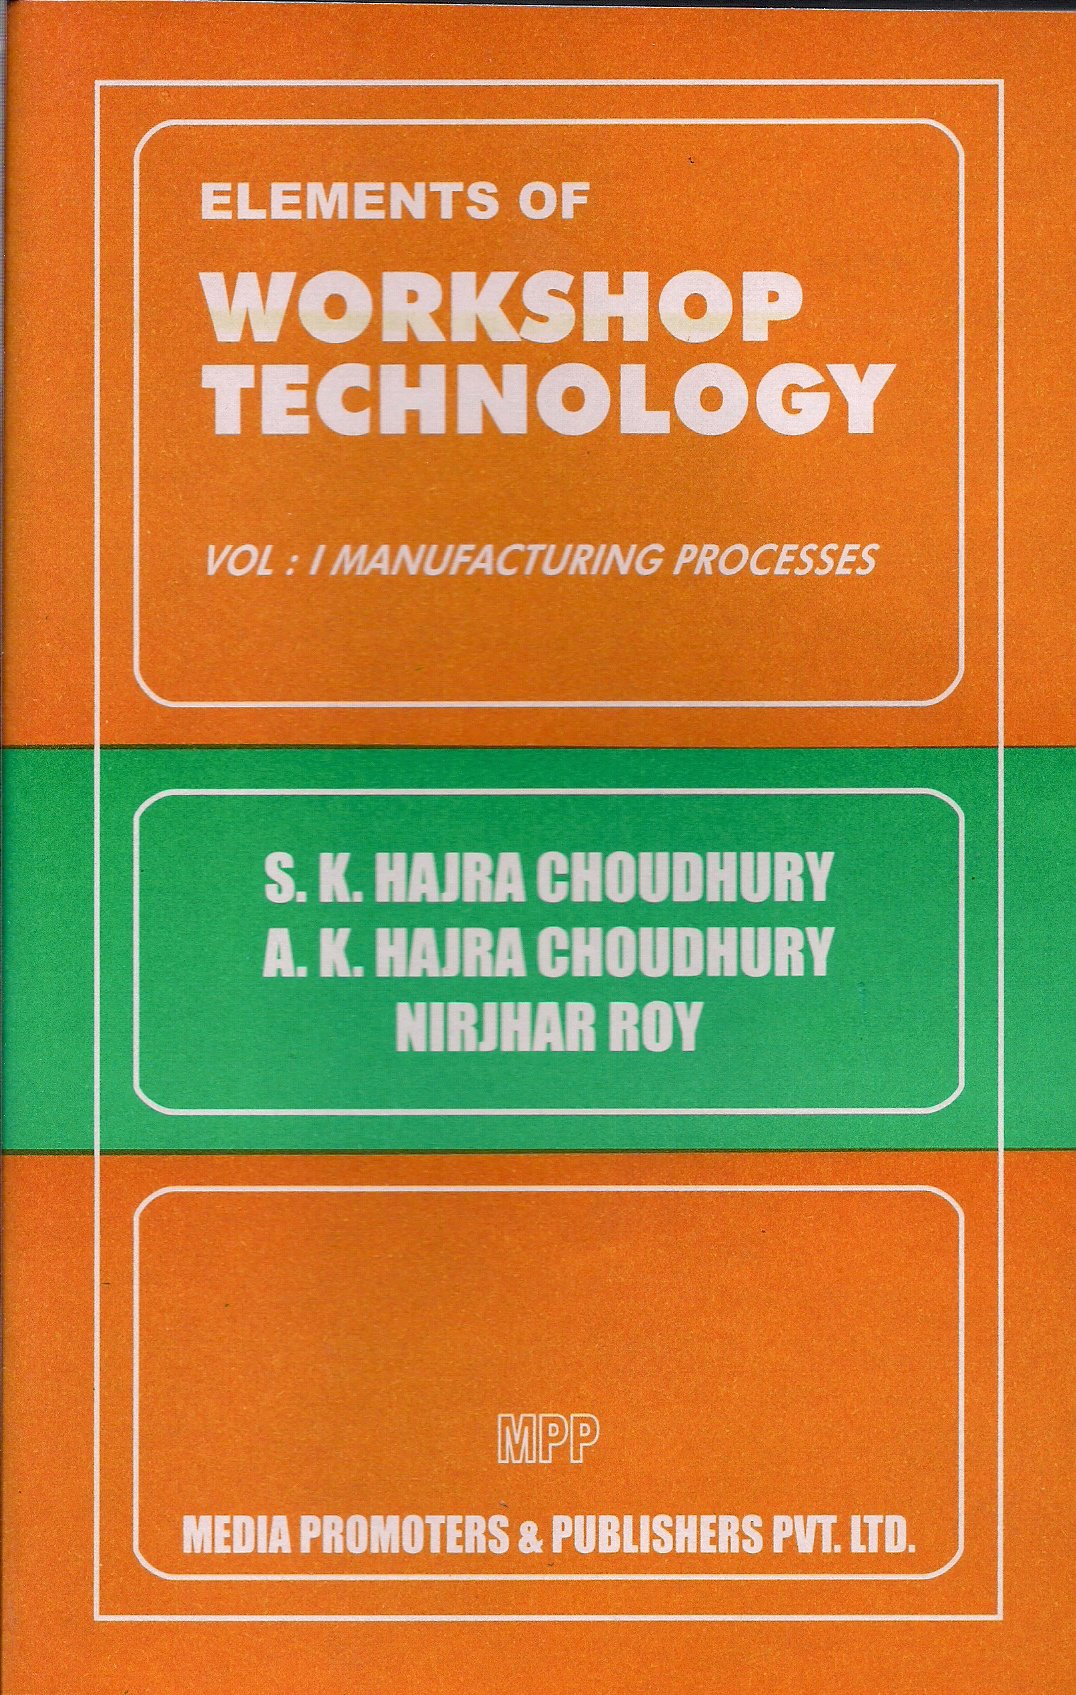 elements of workshop technology by hajra choudhary pdf free